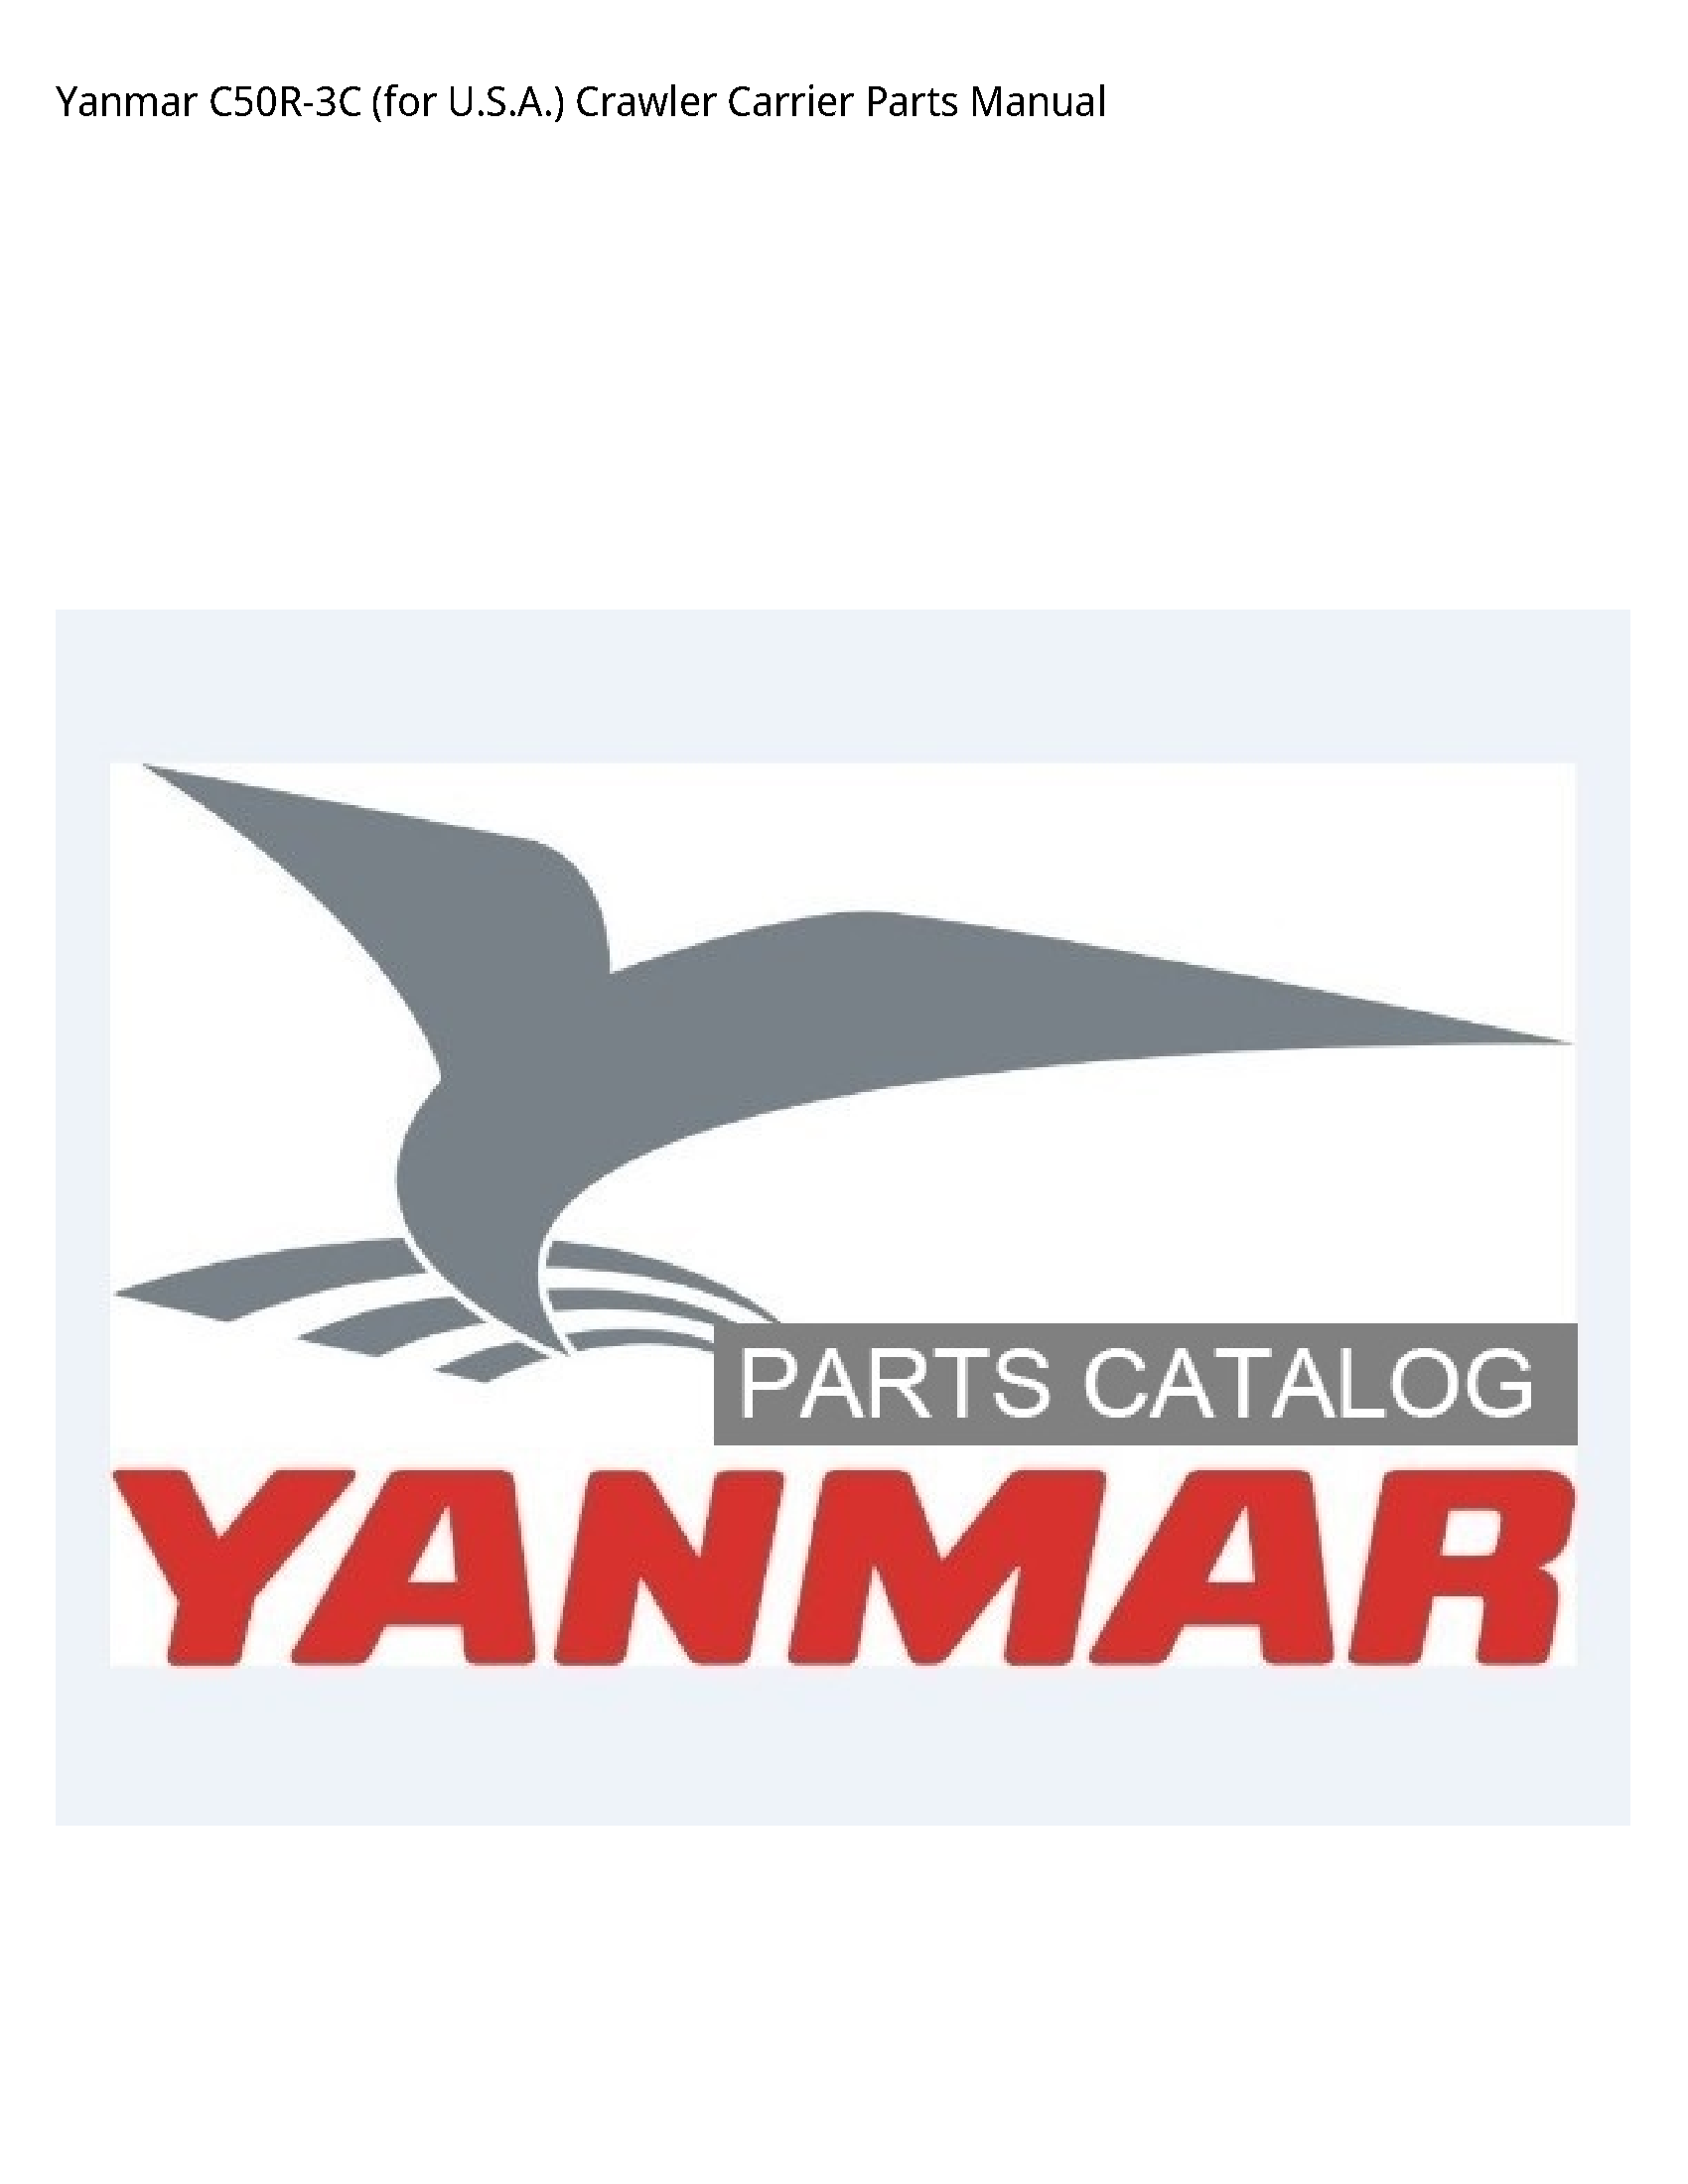 Yanmar C50R-3C (for U.S.A.) Crawler Carrier Parts manual